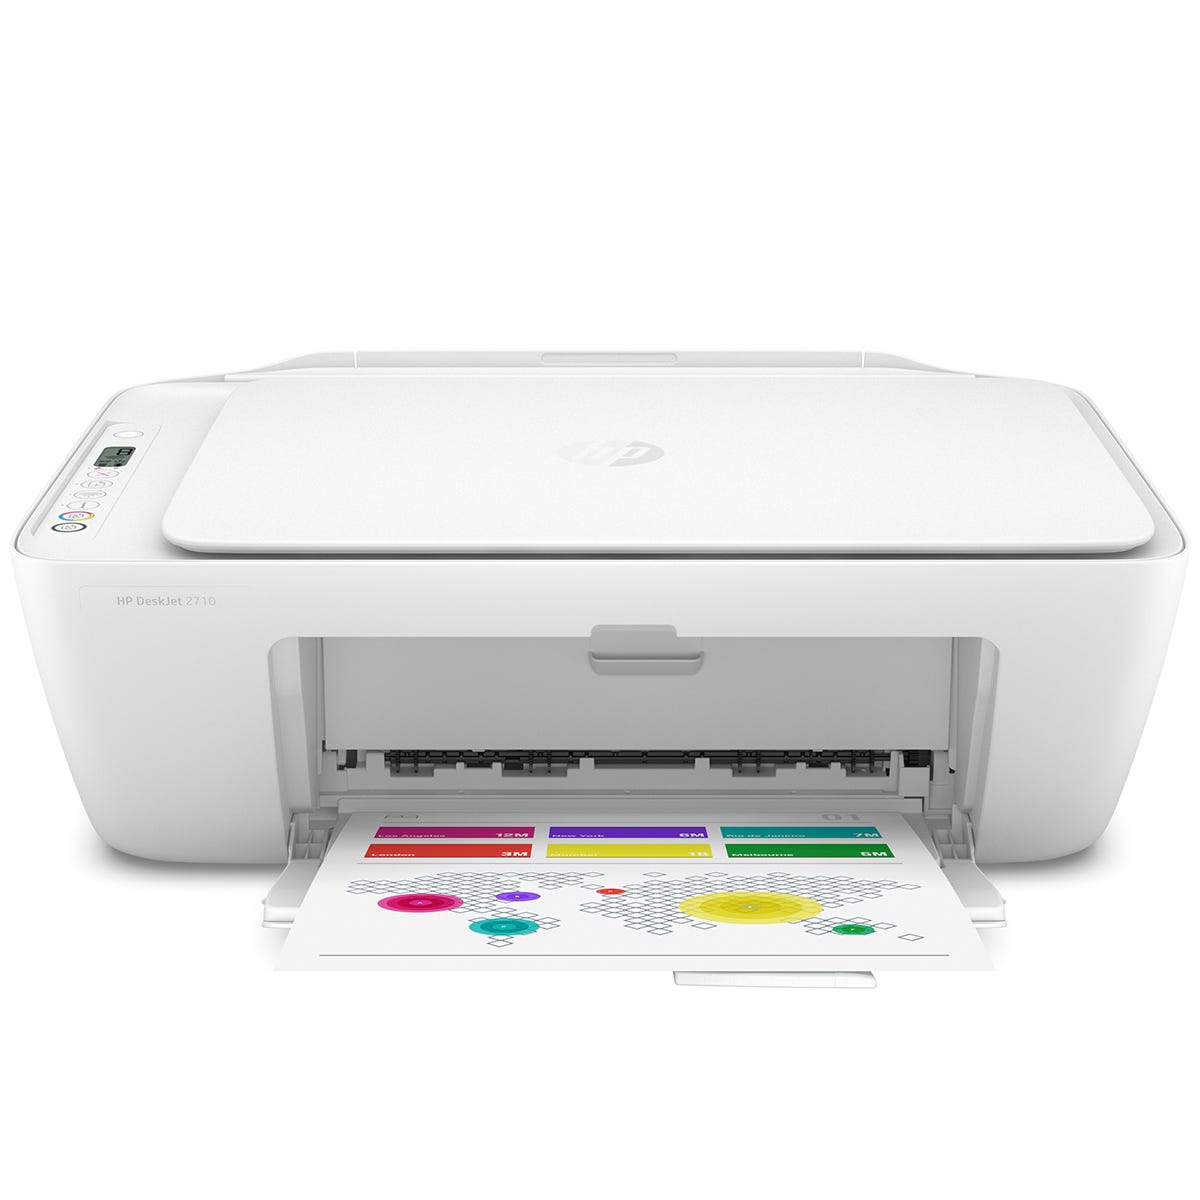 HP Deskjet 2710 Wireless All-in-One Printer - White